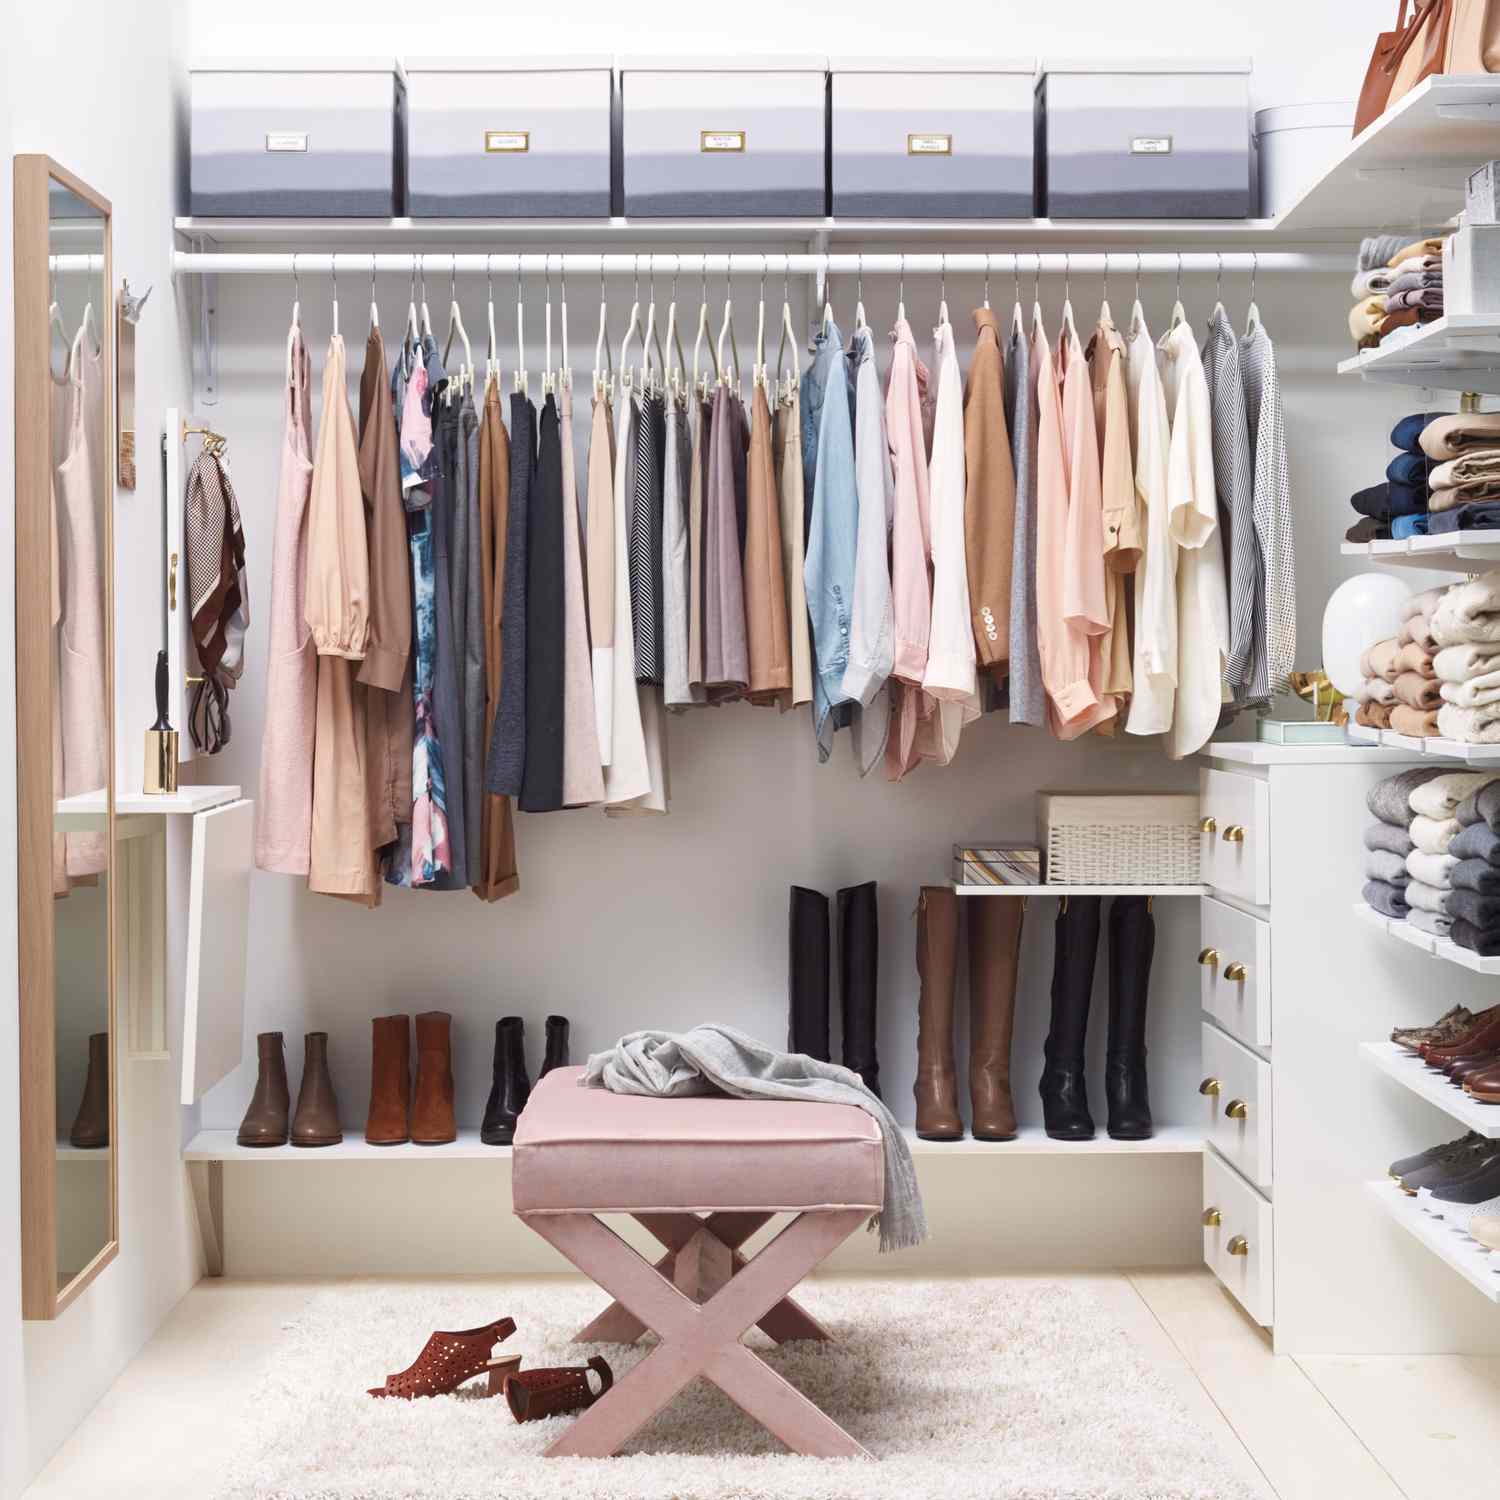 How to Prepare Your Closet for a New Season | Martha Stewart